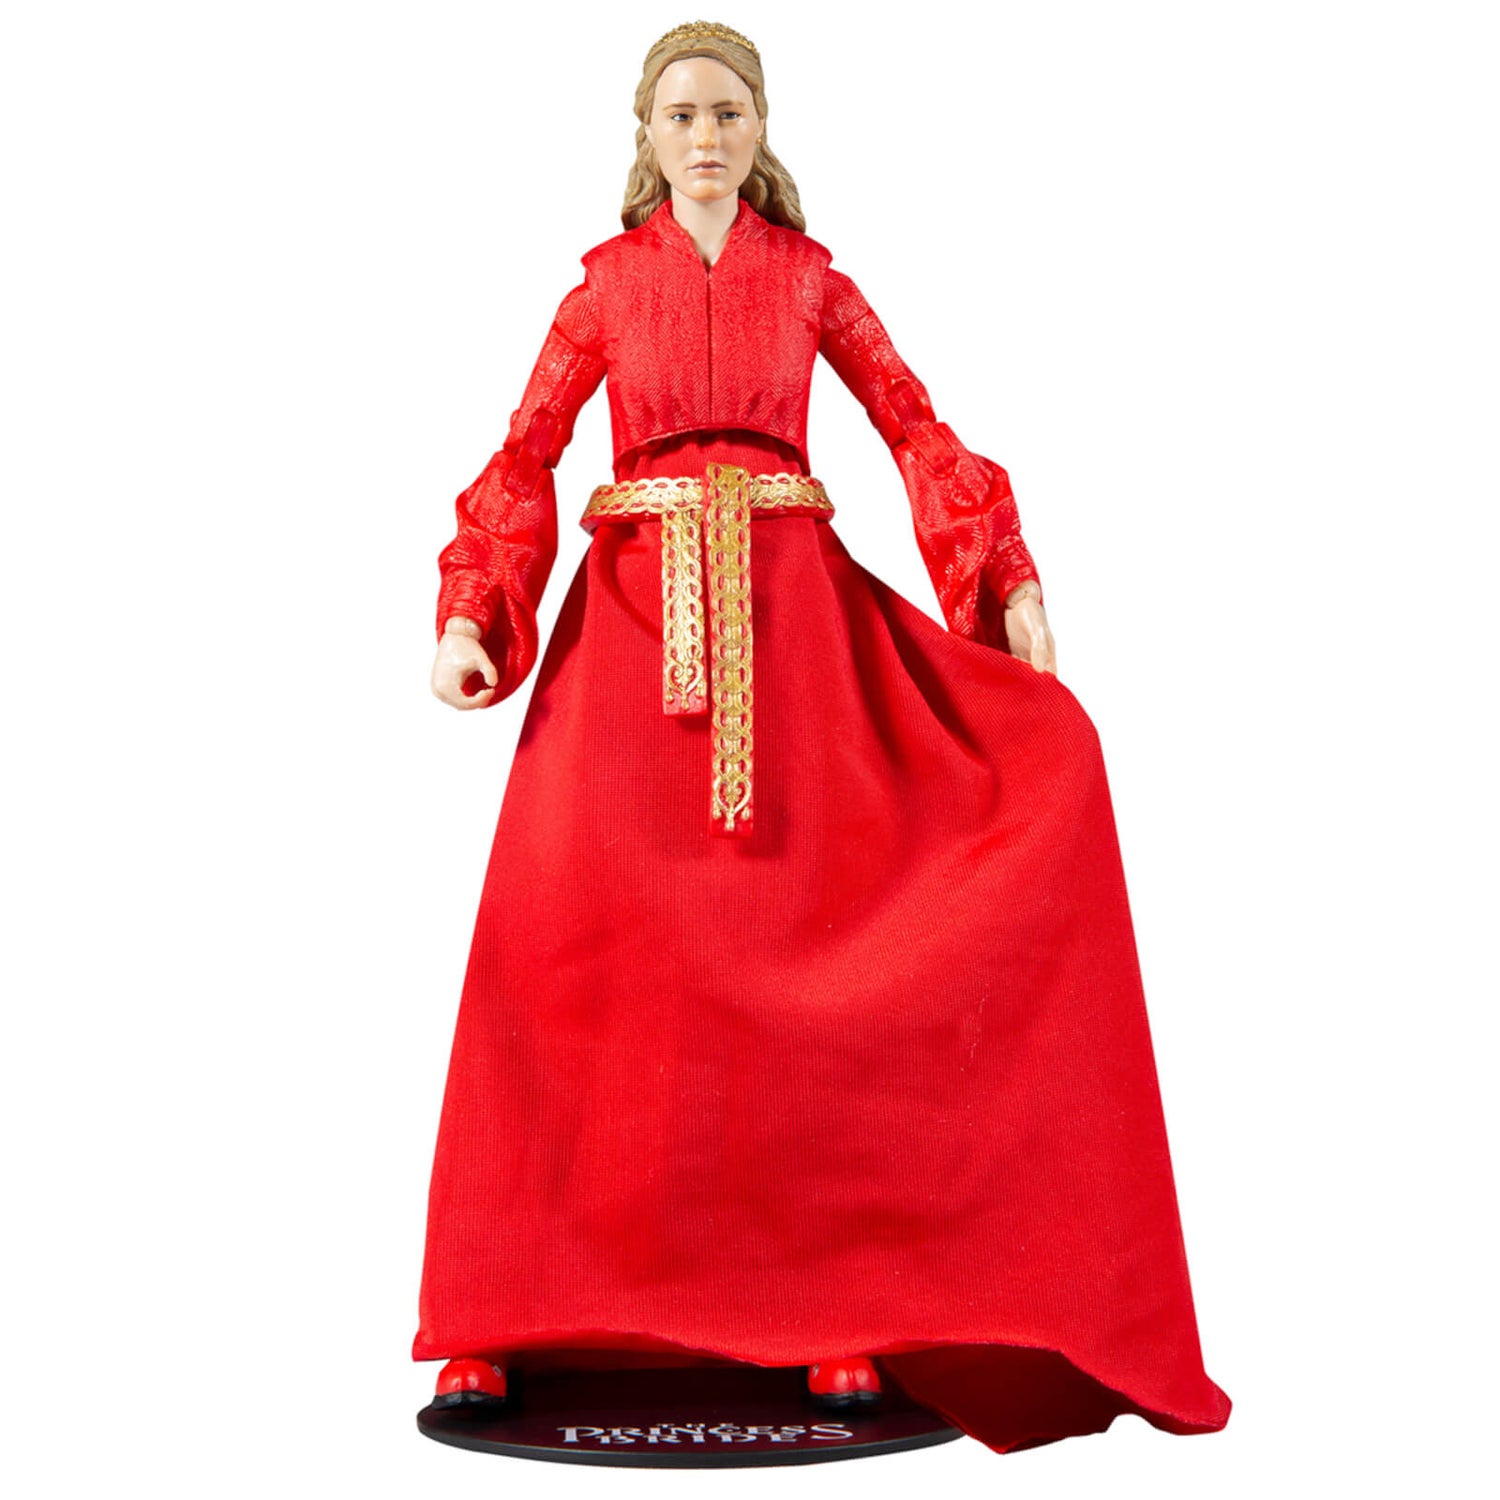 McFarlane The Princess Bride 7 Inch Action Figure - Princess Buttercup (Red Dress)